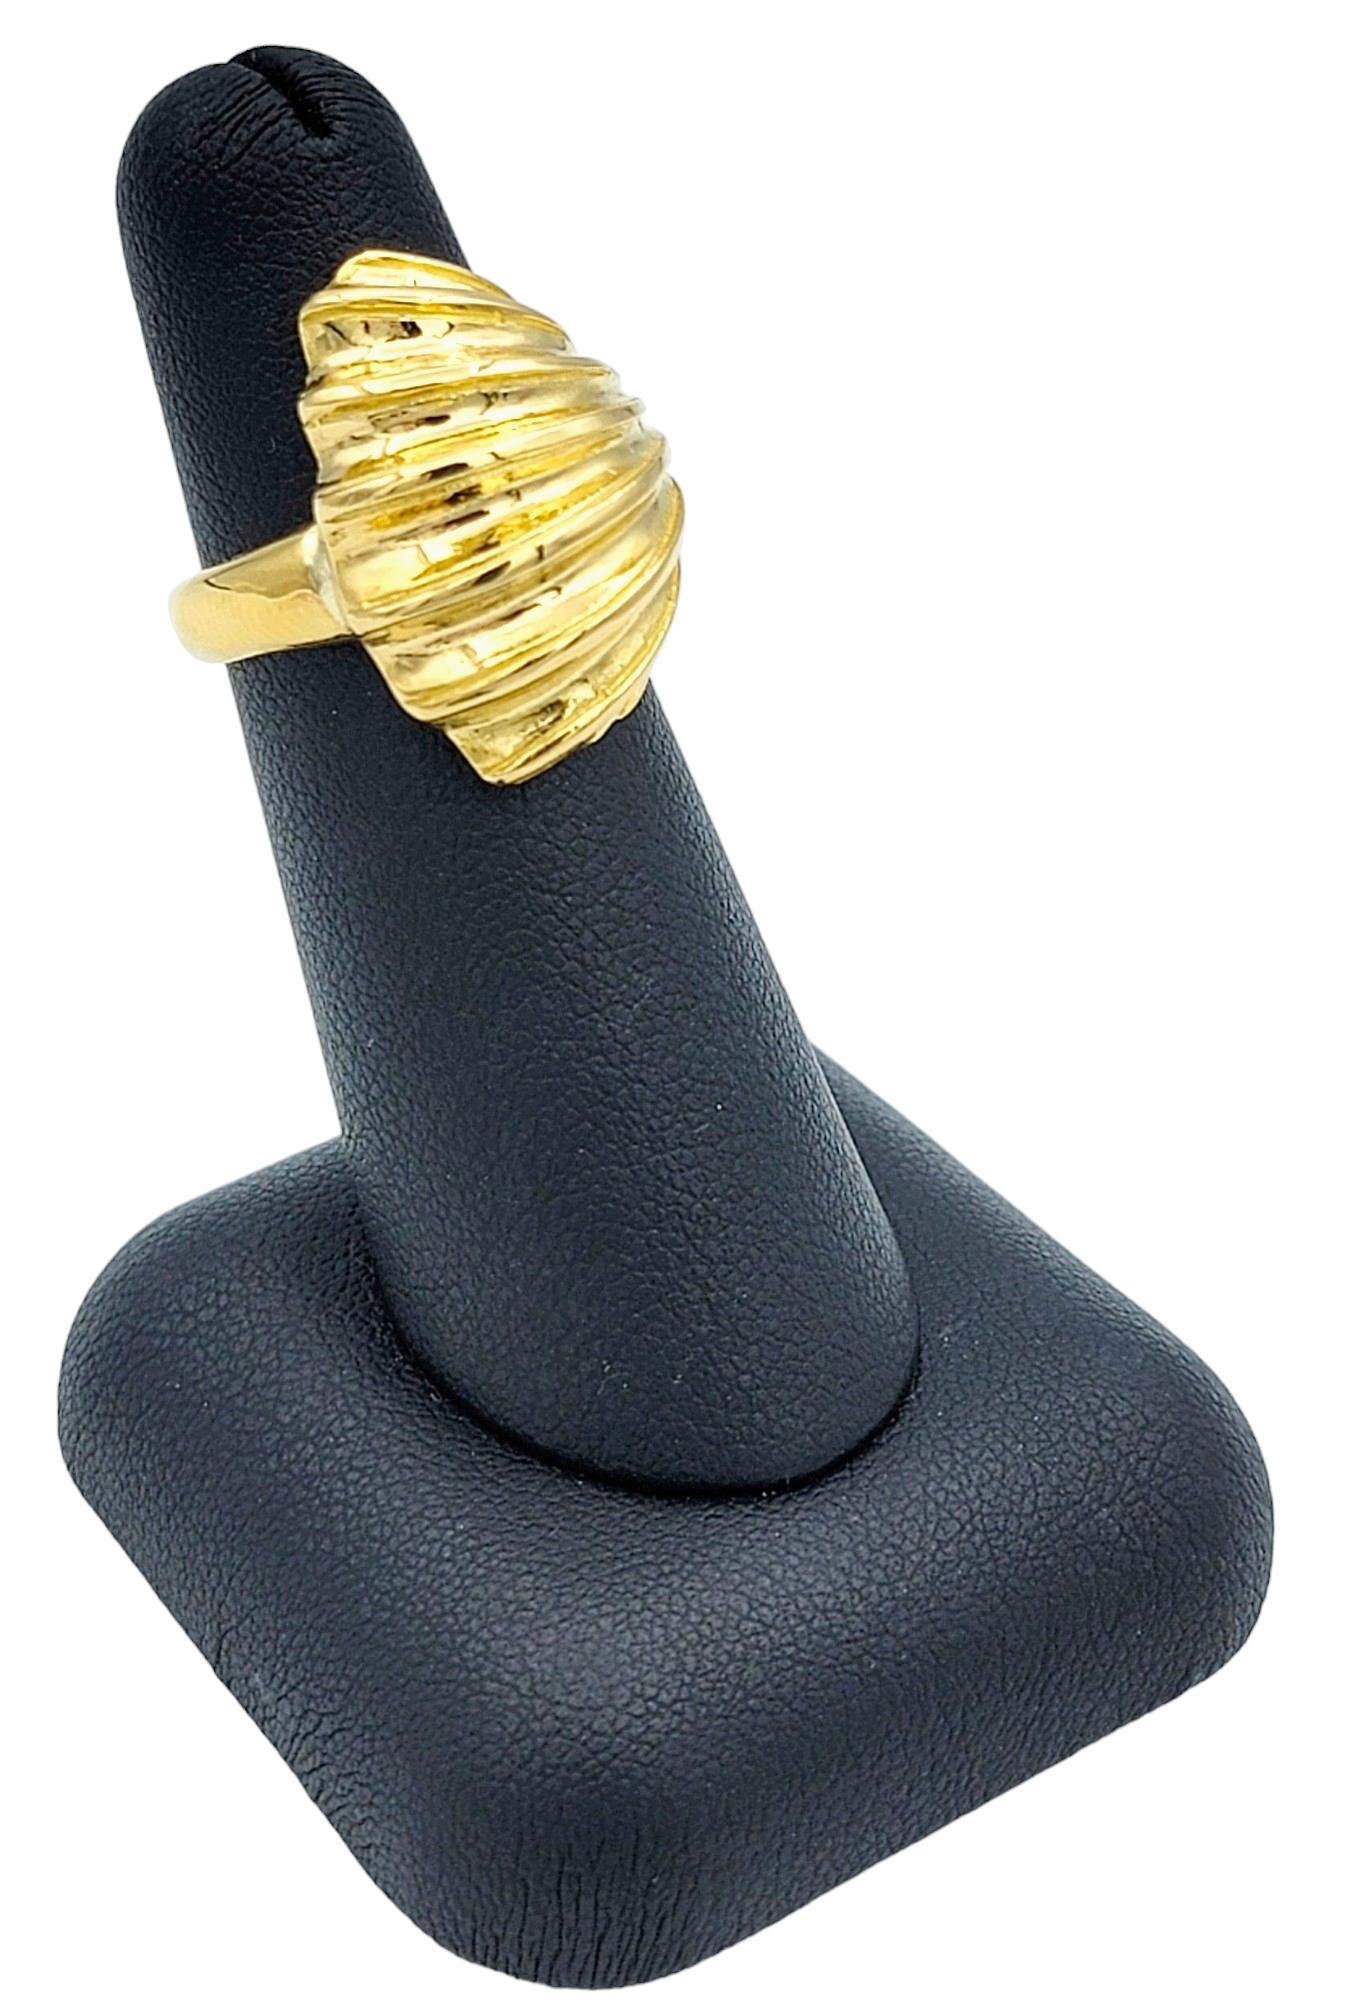 Illias Lalaounis Ridged Shell Design Wrap Cocktail Ring in 22 Karat Yellow Gold For Sale 4